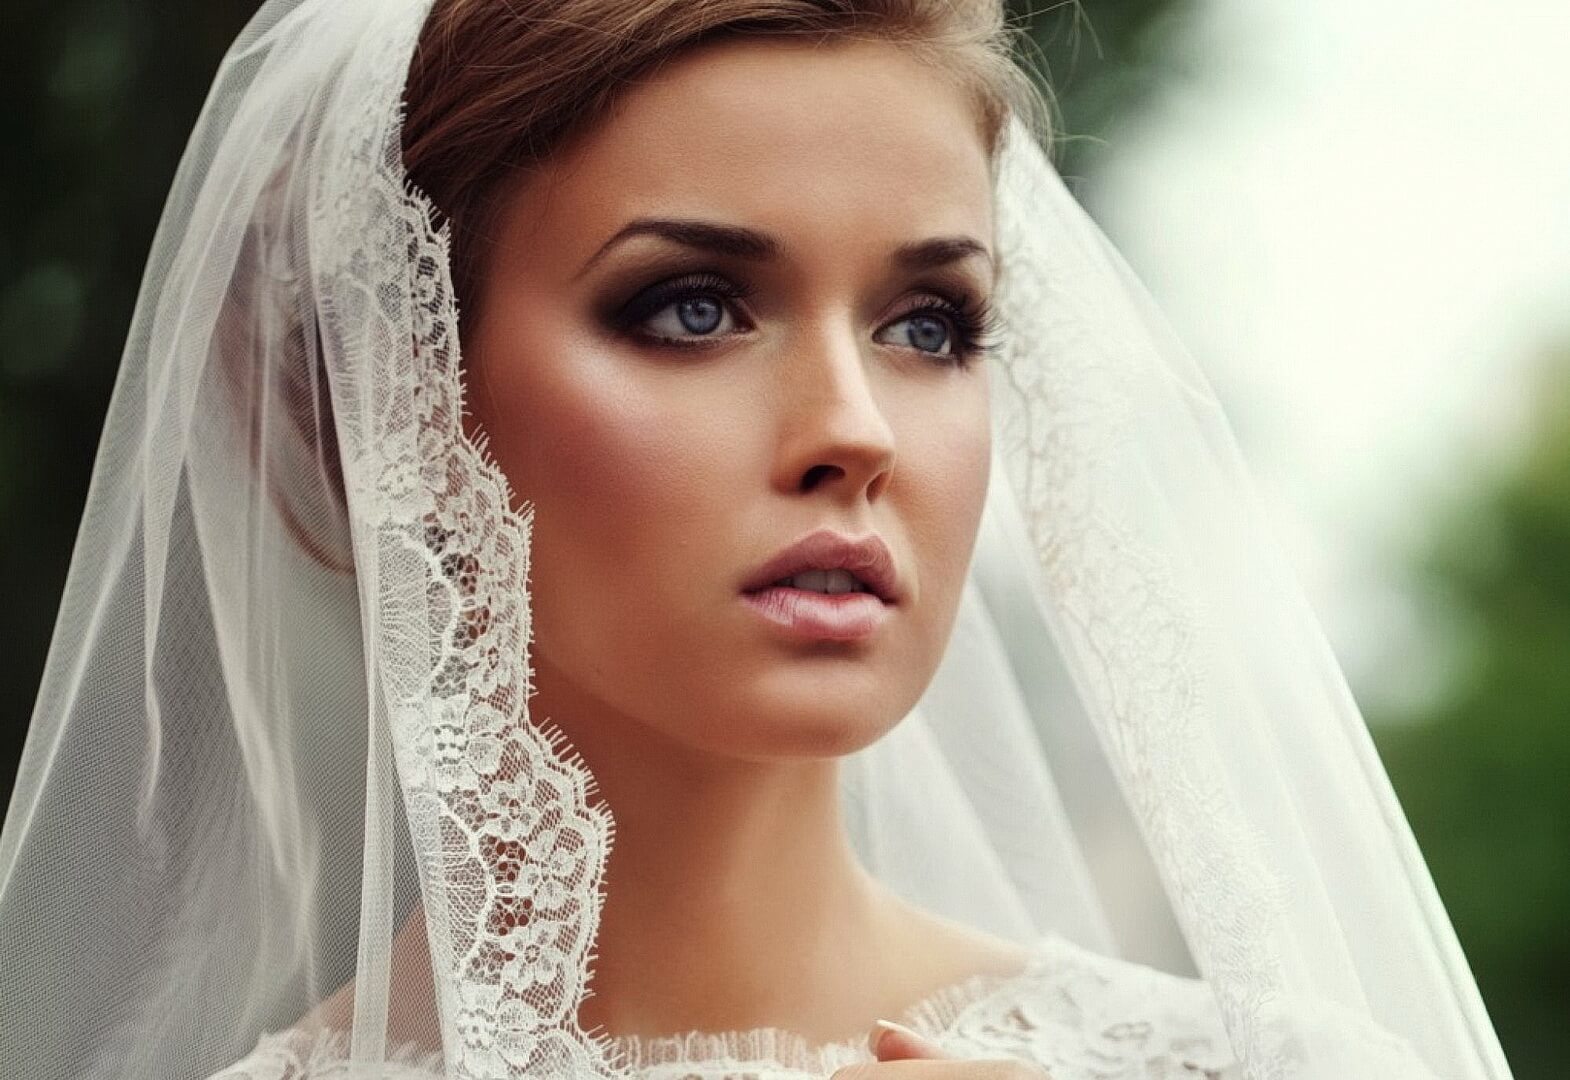 The Eligible Bride bridal makeup tips